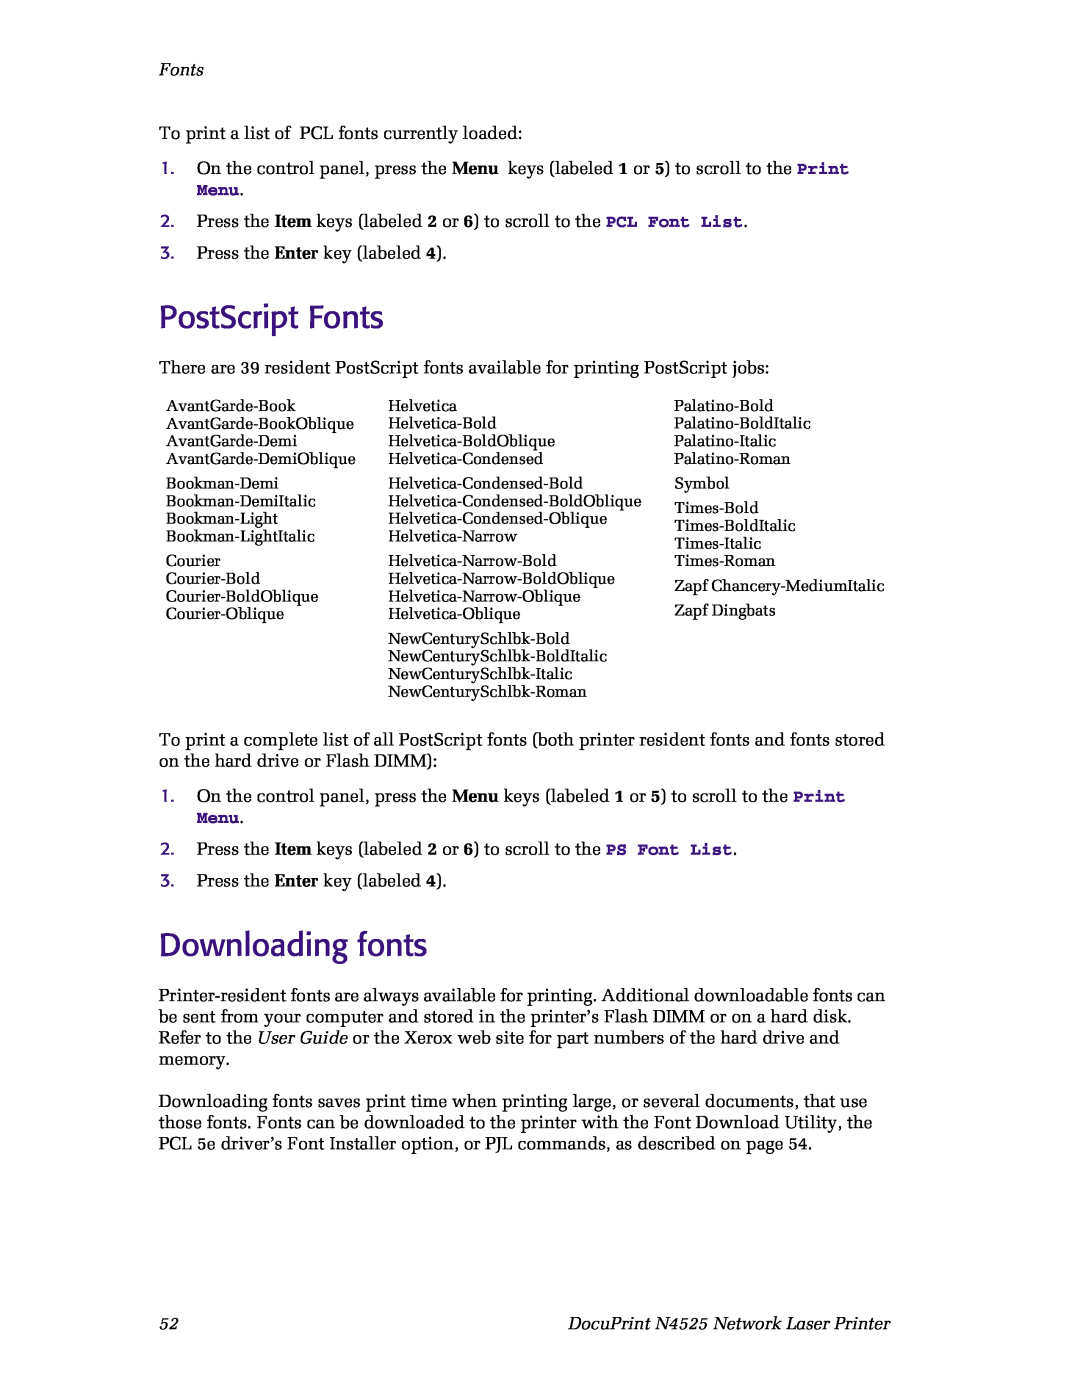 Xerox manual PostScript Fonts, Downloading fonts, DocuPrint N4525 Network Laser Printer 